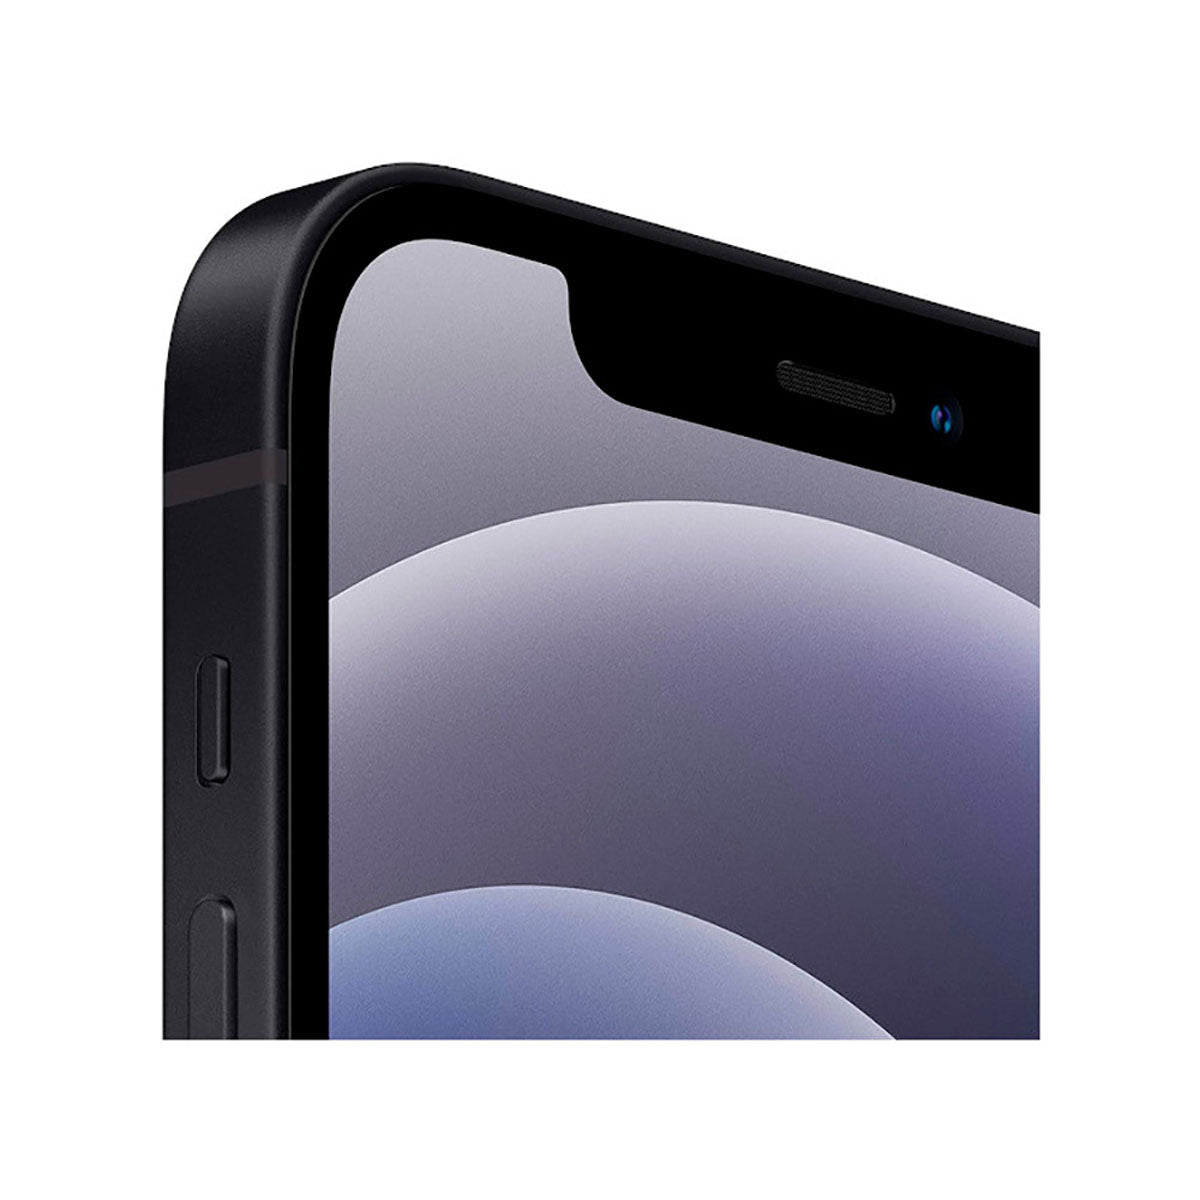 Apple iPhone 12 128GB Negro